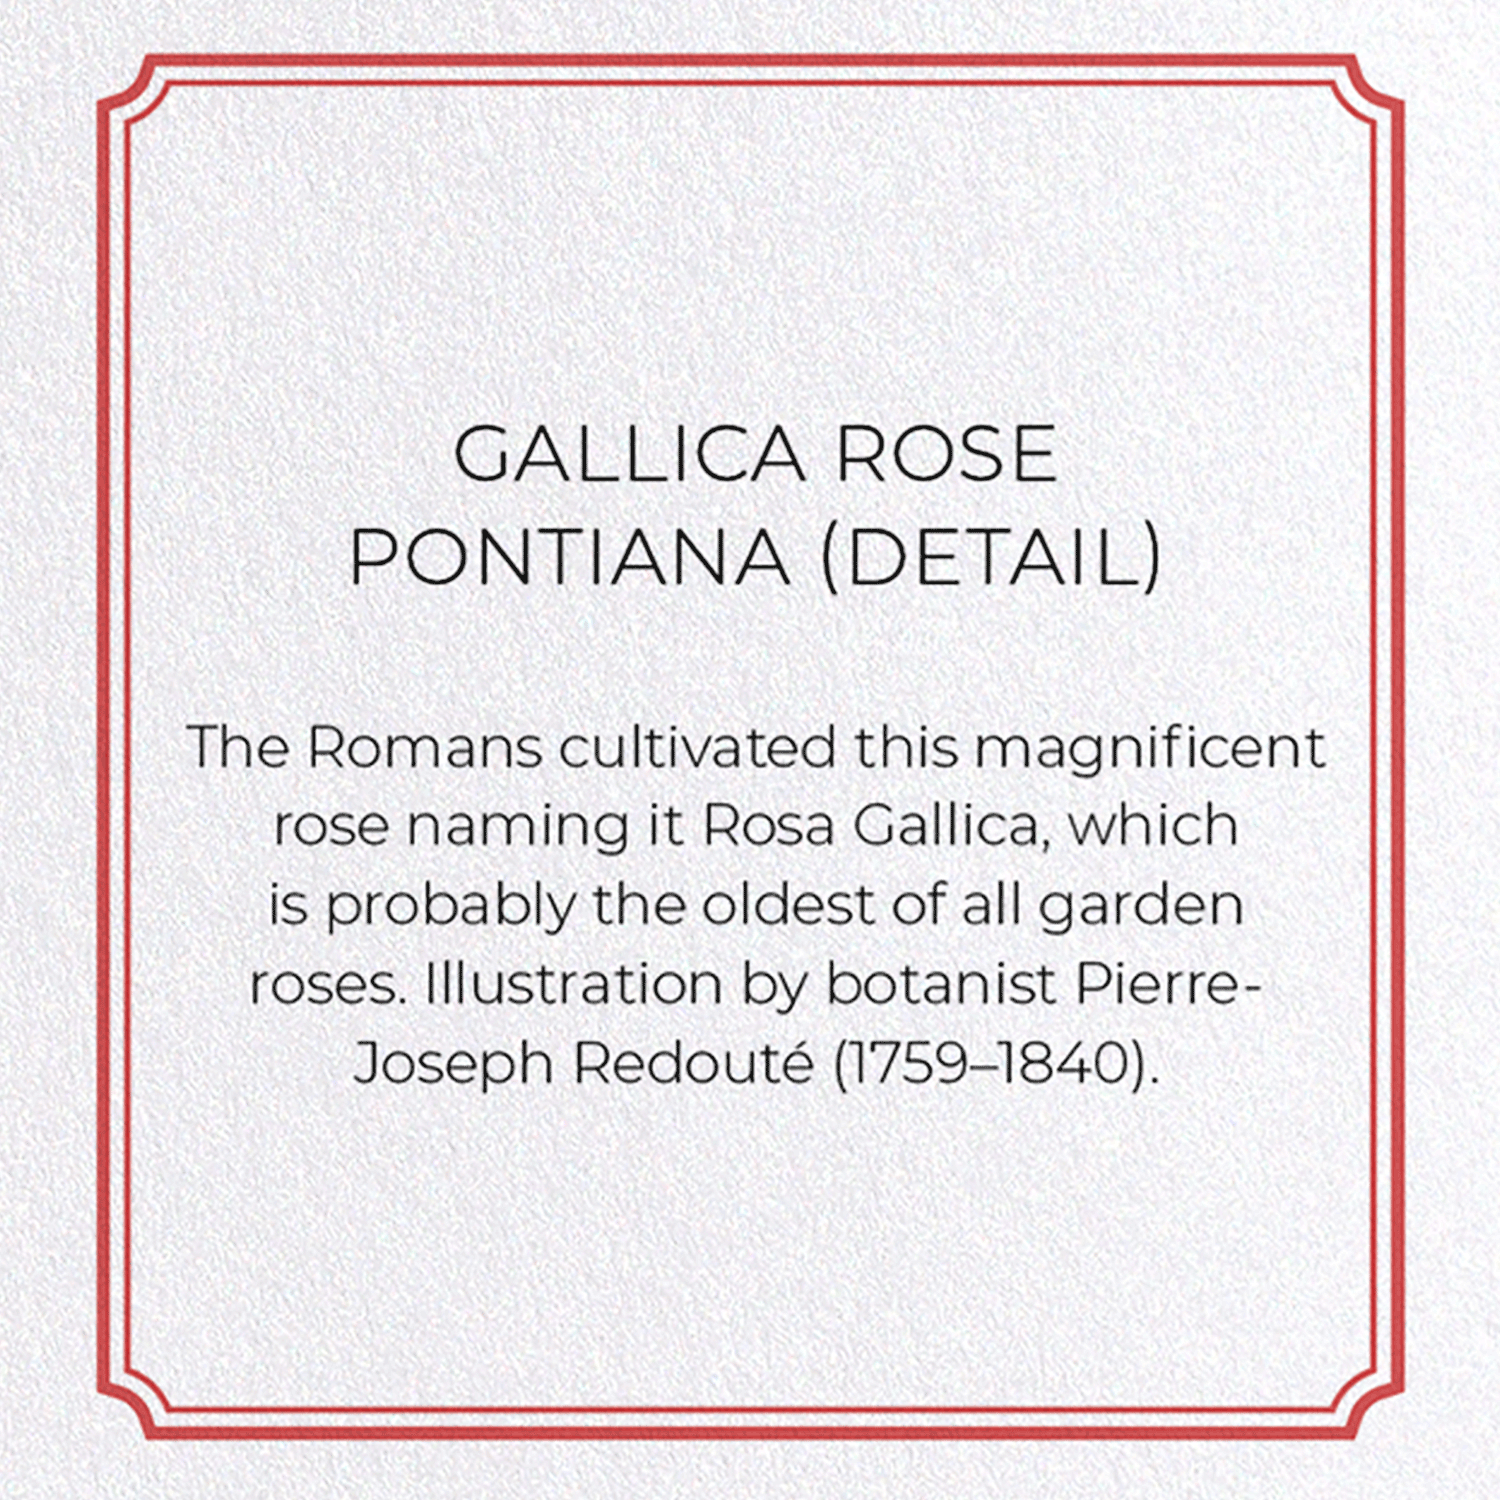 GALLICA ROSE PONTIANA: Botanical Greeting Card